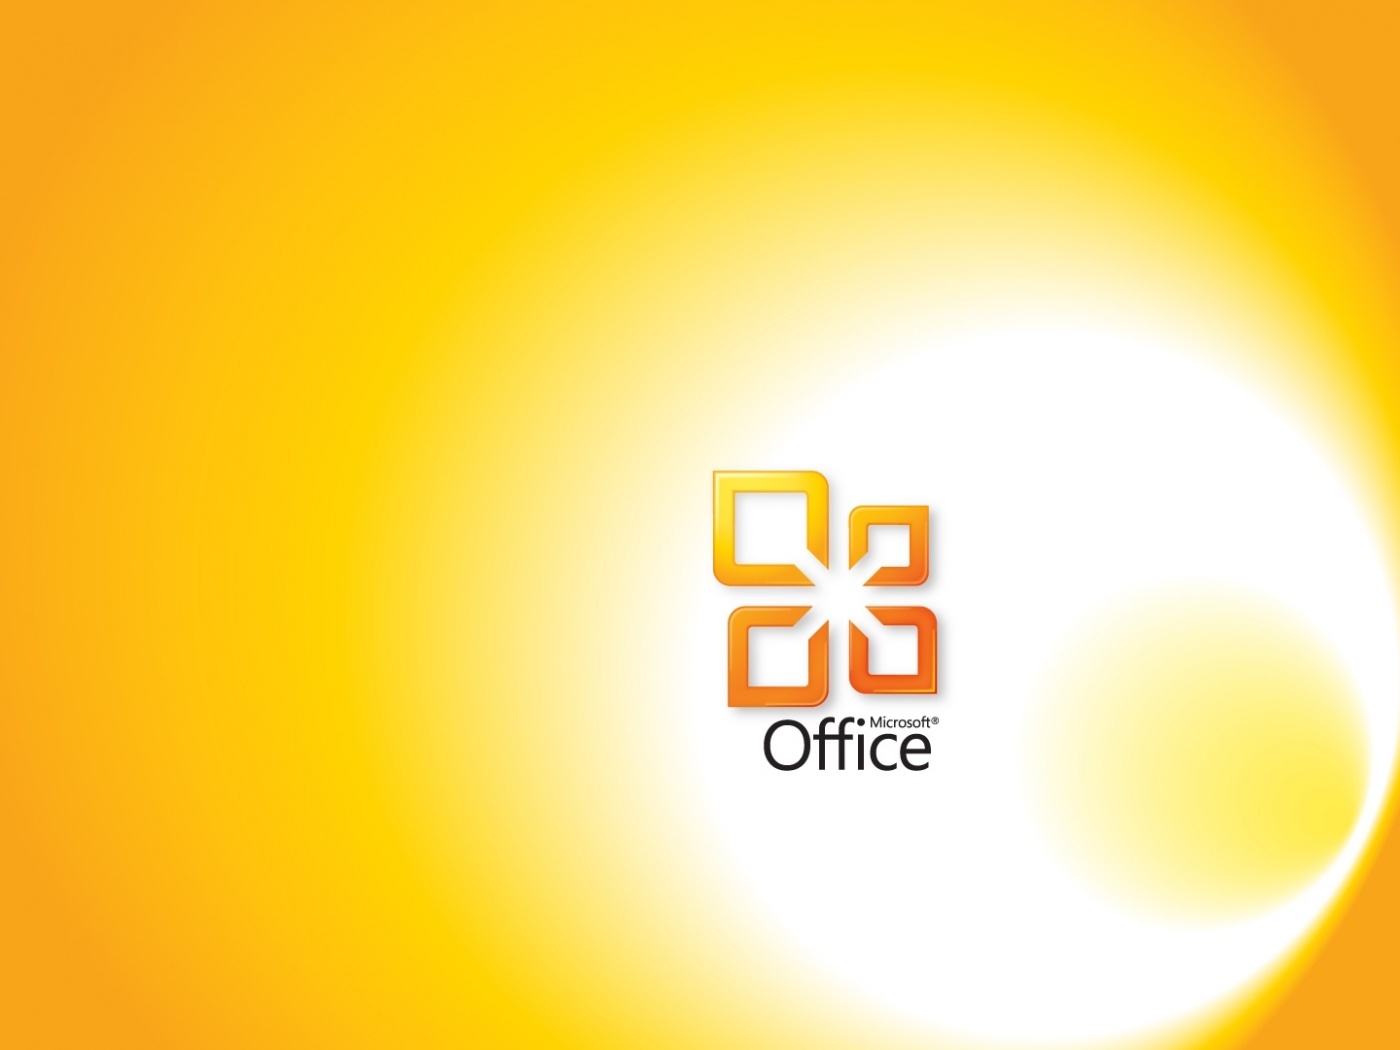 Microsoft Office Yellow Computer Wallpaper